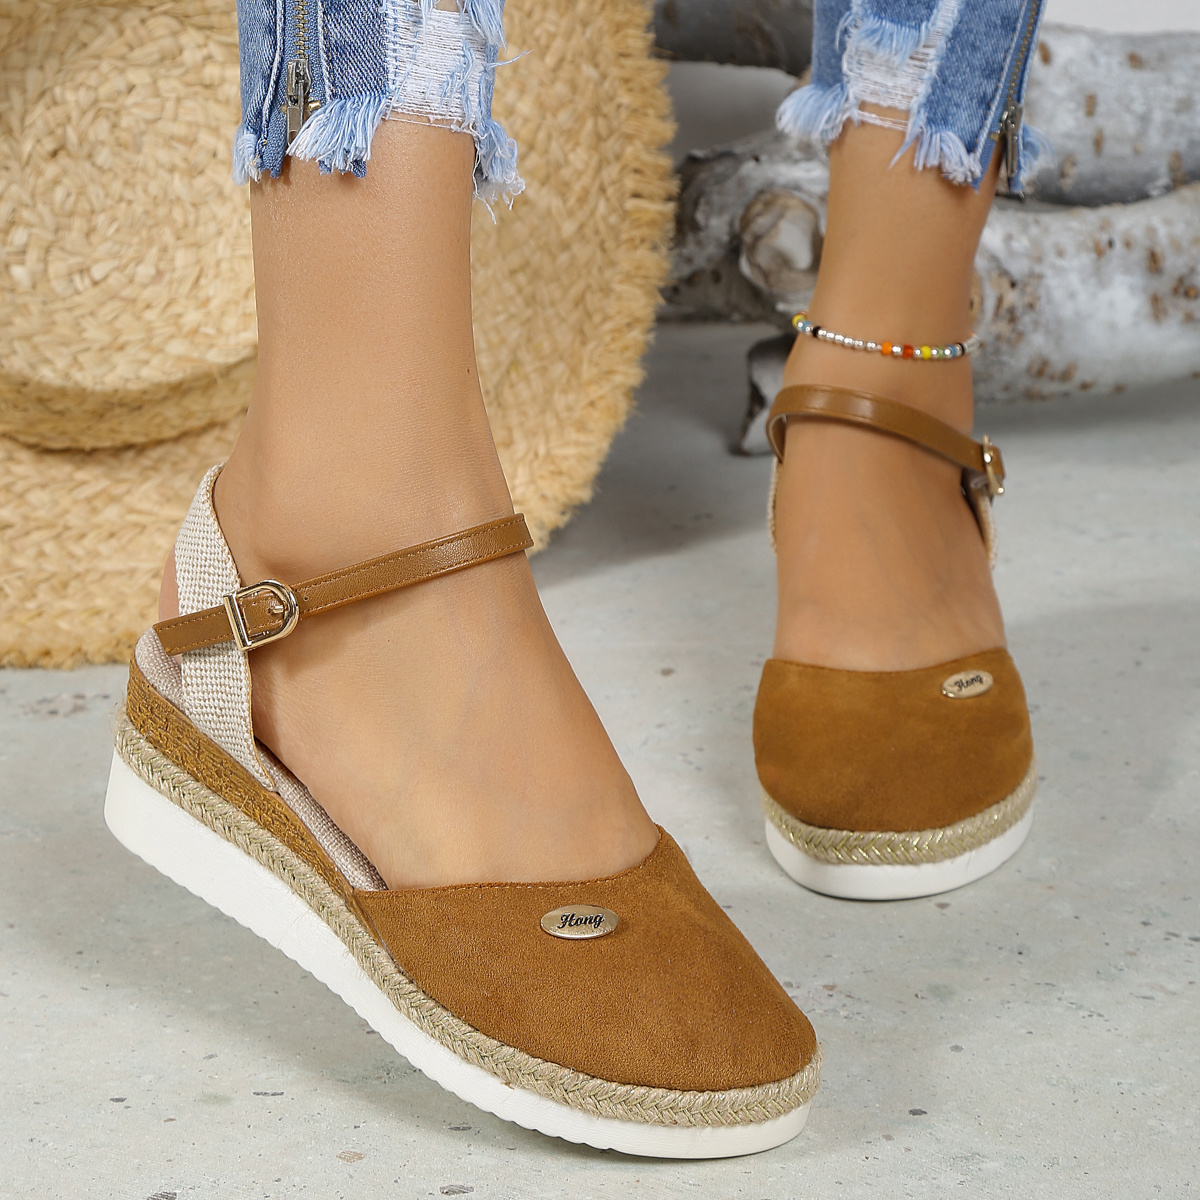 Women's Closed Toe Platform Sandals、Round Toe Ankle Elastic Strap Buckle  Wedge Espadrilles Shoes、Summer Comfy Footwear